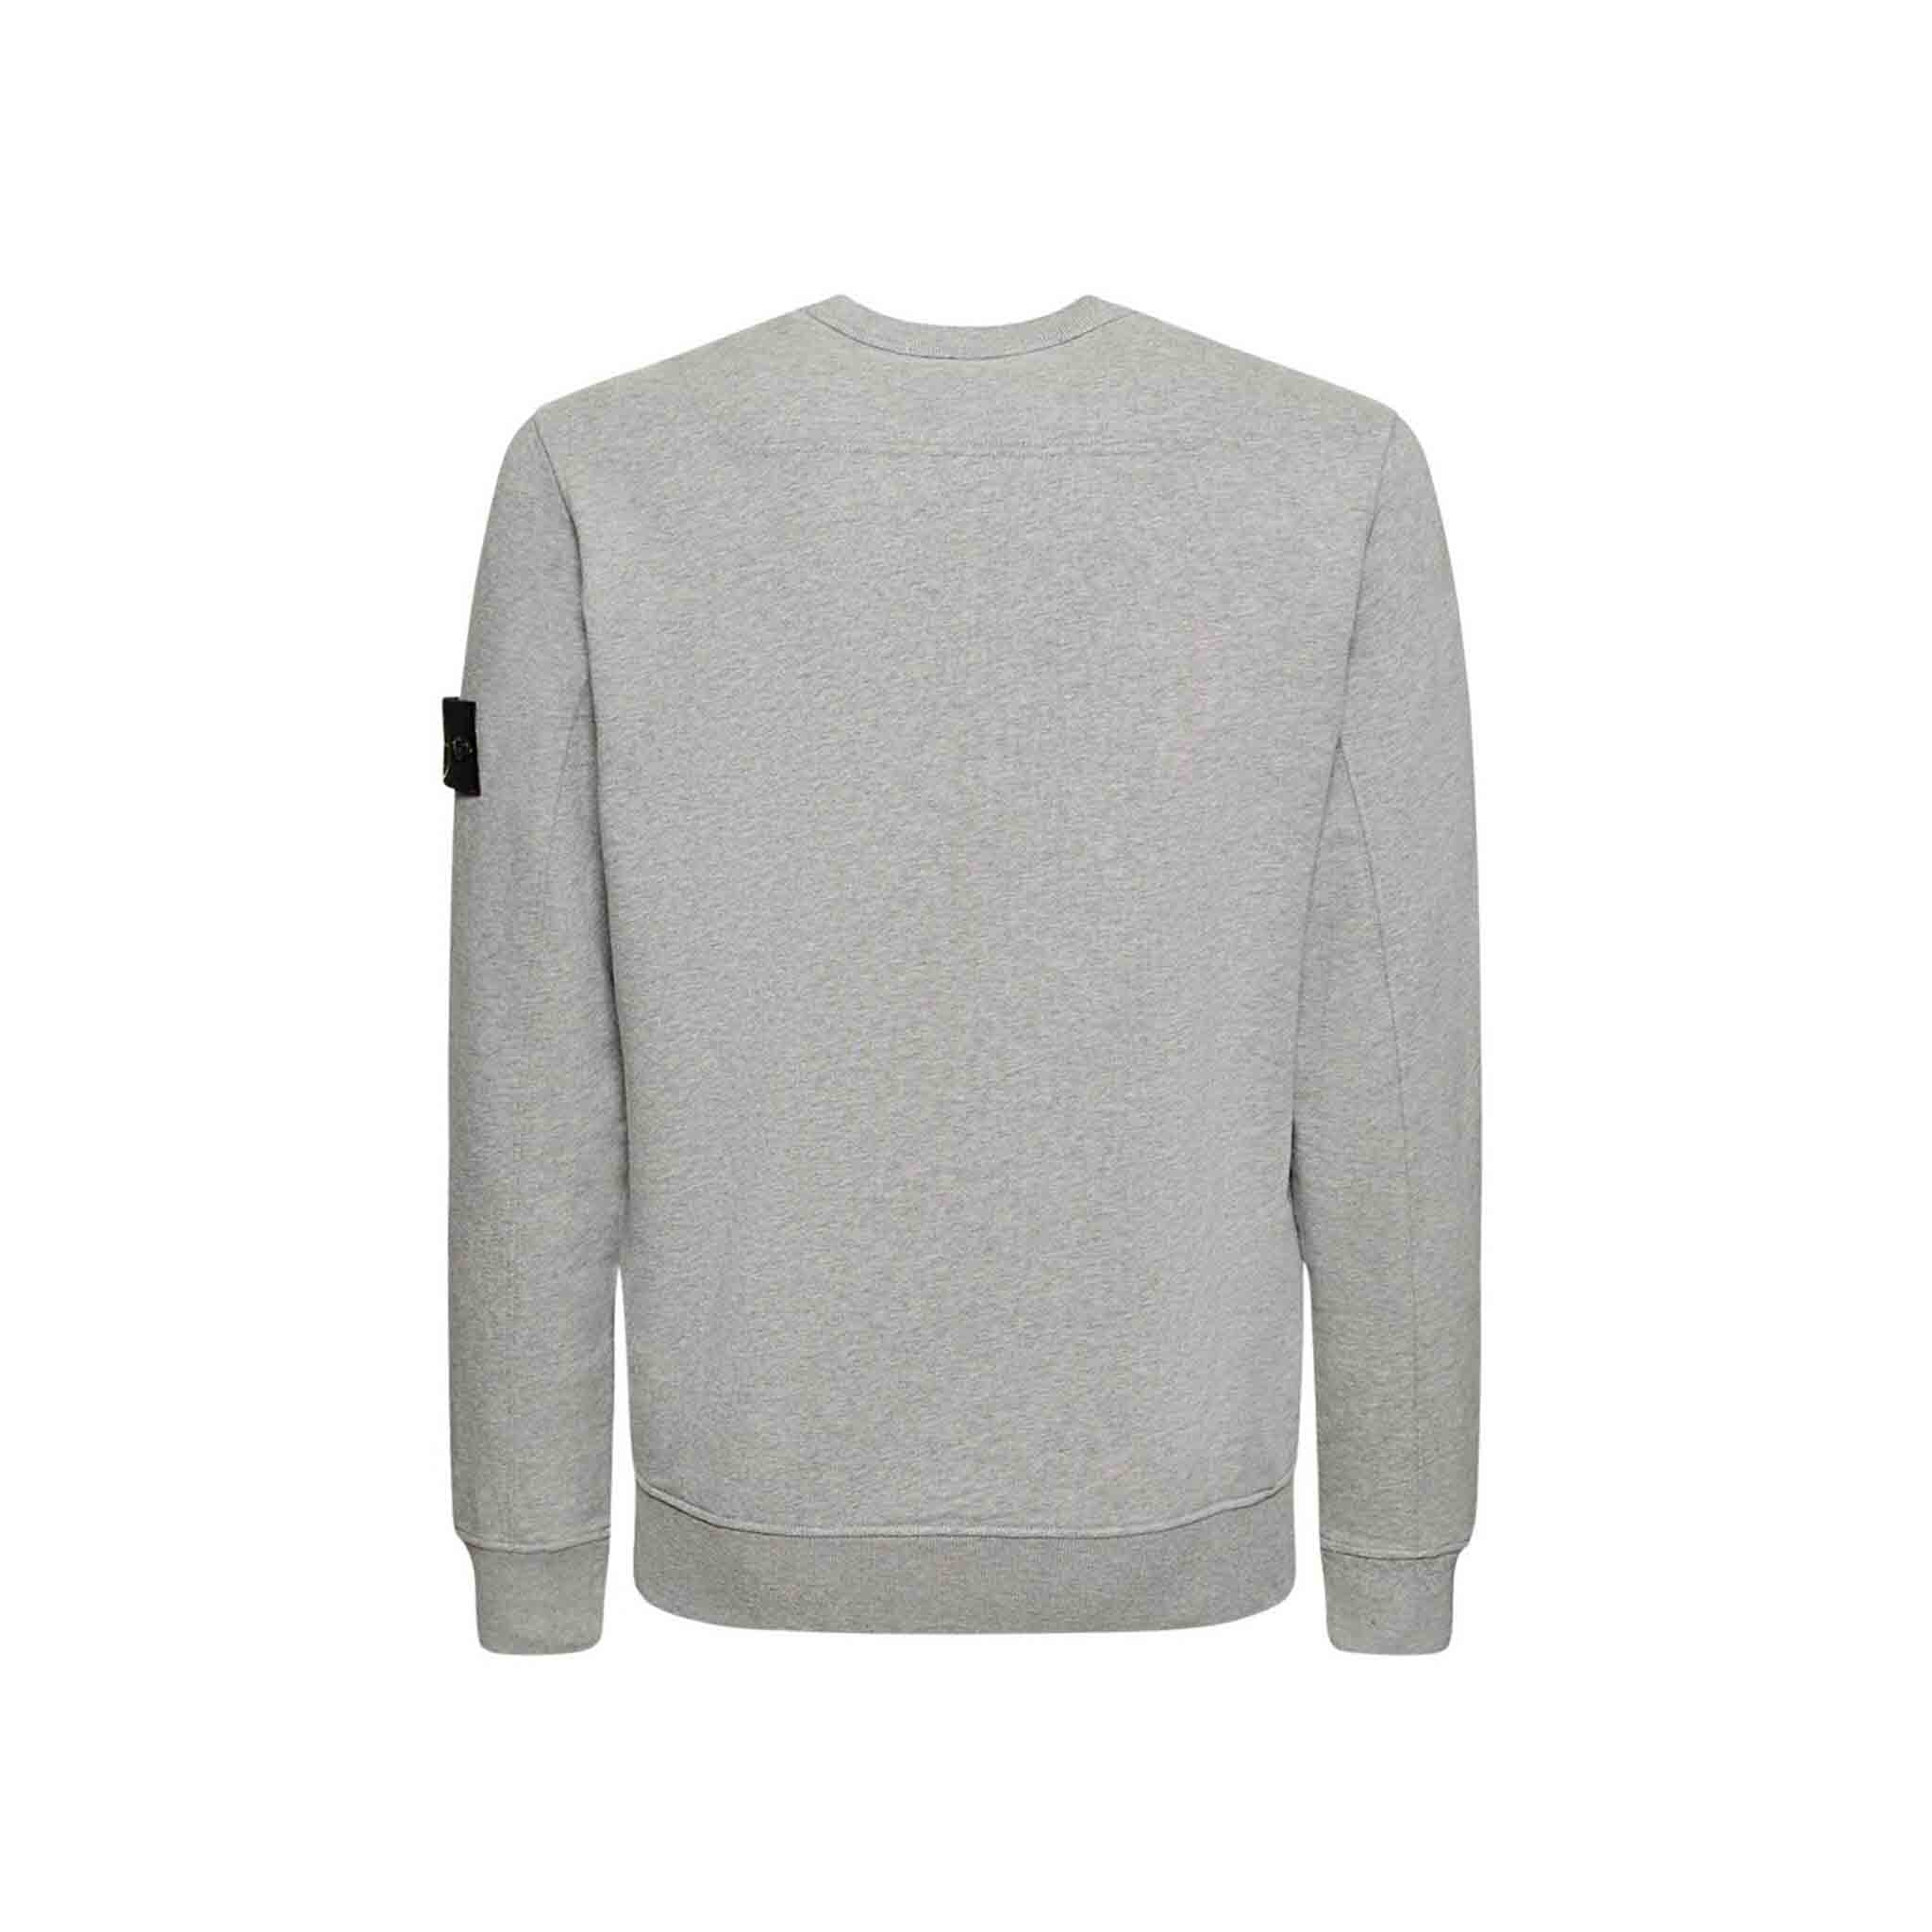 Stone Island Garment Dyed Crewneck Sweatshirt in Grey Melange